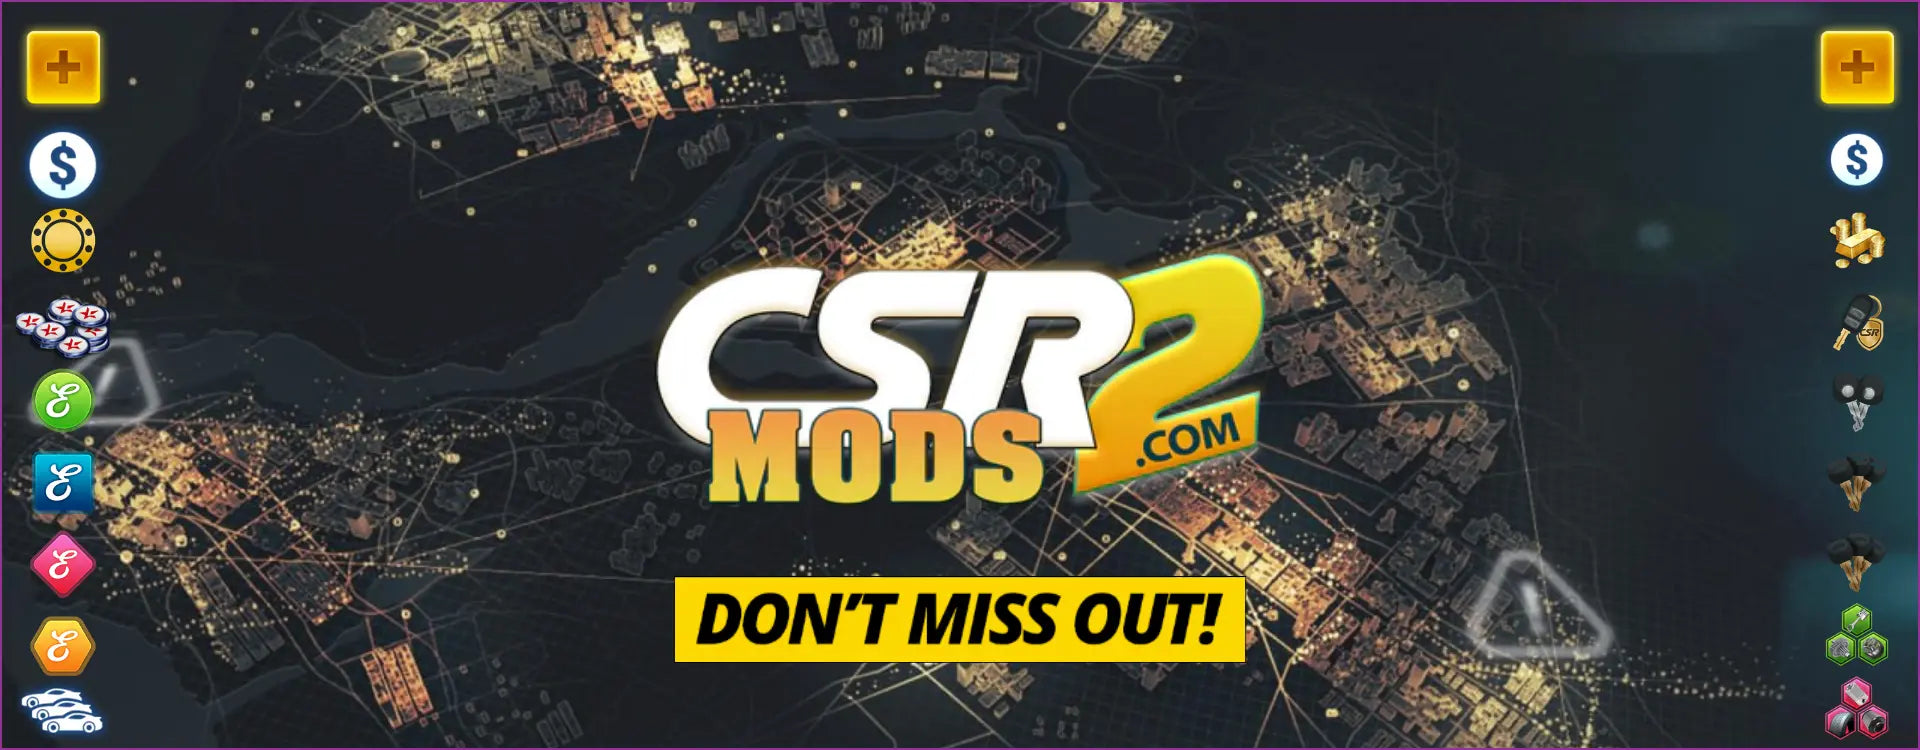 CSR Racing 2 Mod APK Dec 23 (Free Shopping, Unlimited Money) Latest